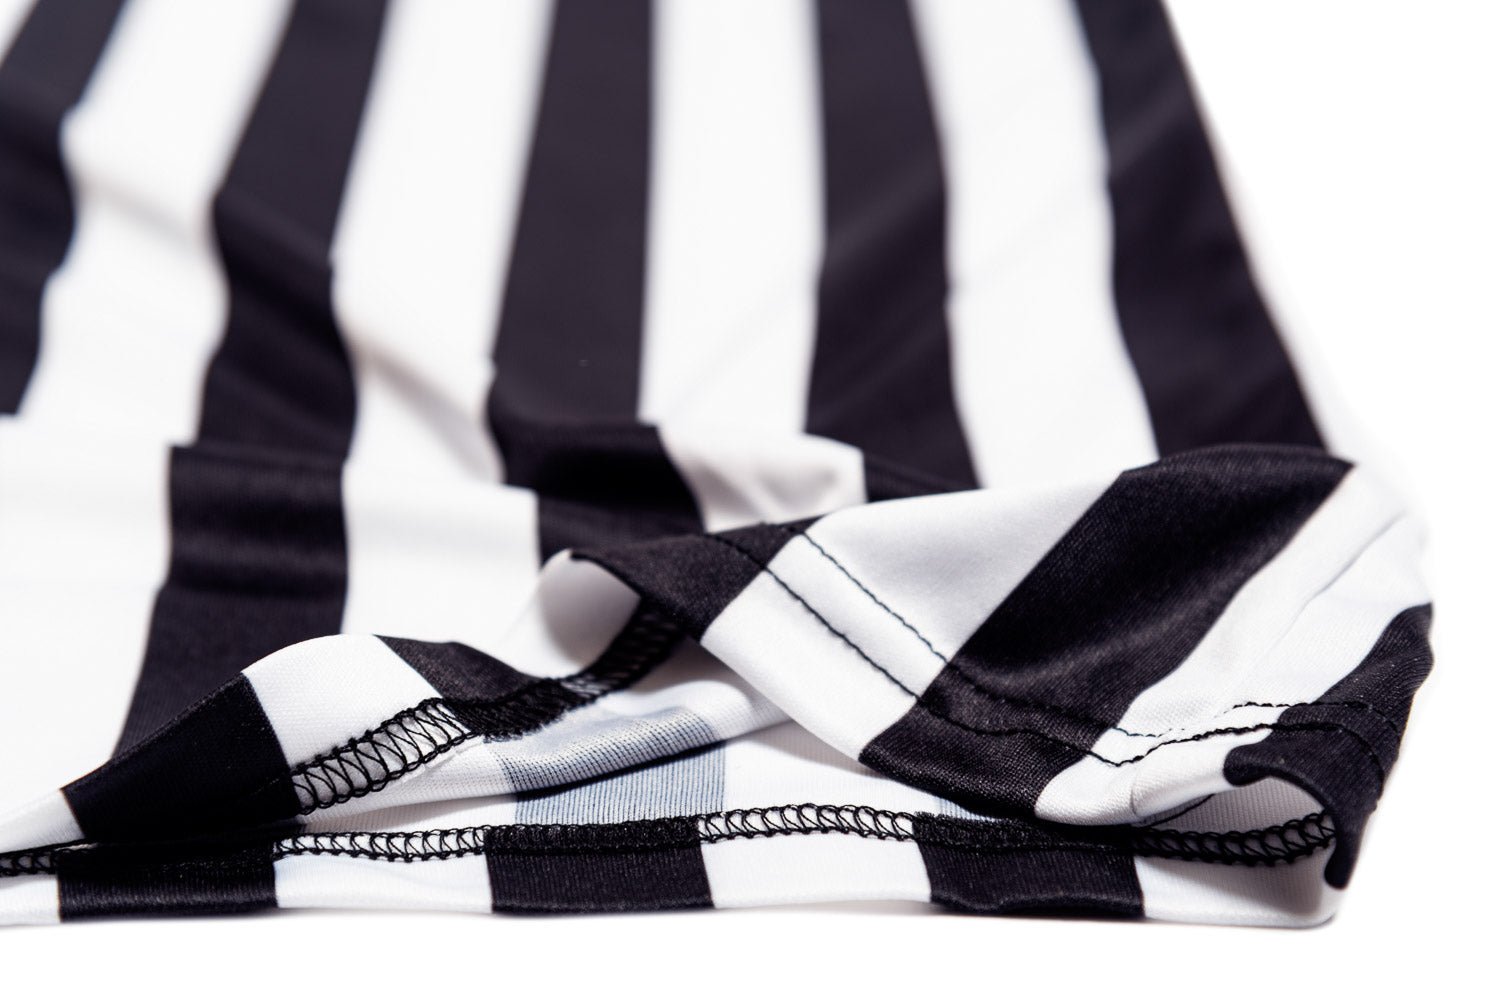 Mato & Hash Women's Referee Tank Top Shirt Uniforms or Costumes W/ Embroidery - Mato & Hash